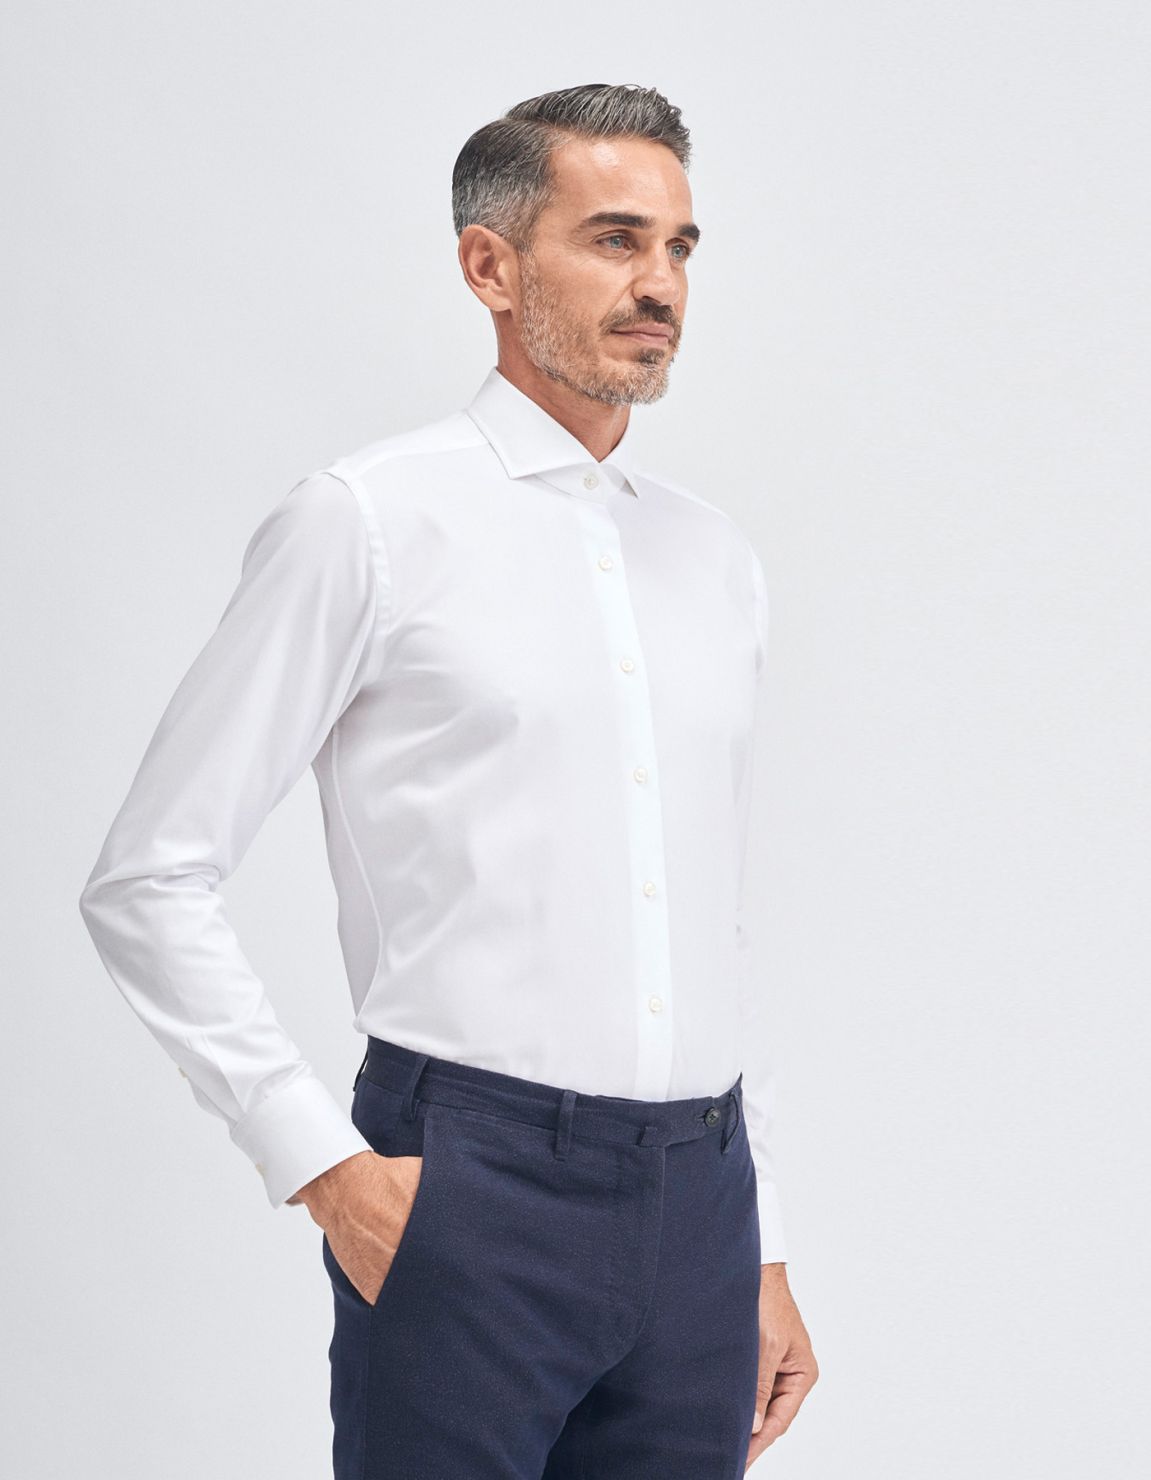 Shirt Collar cutaway White Oxford Tailor Custom Fit 1